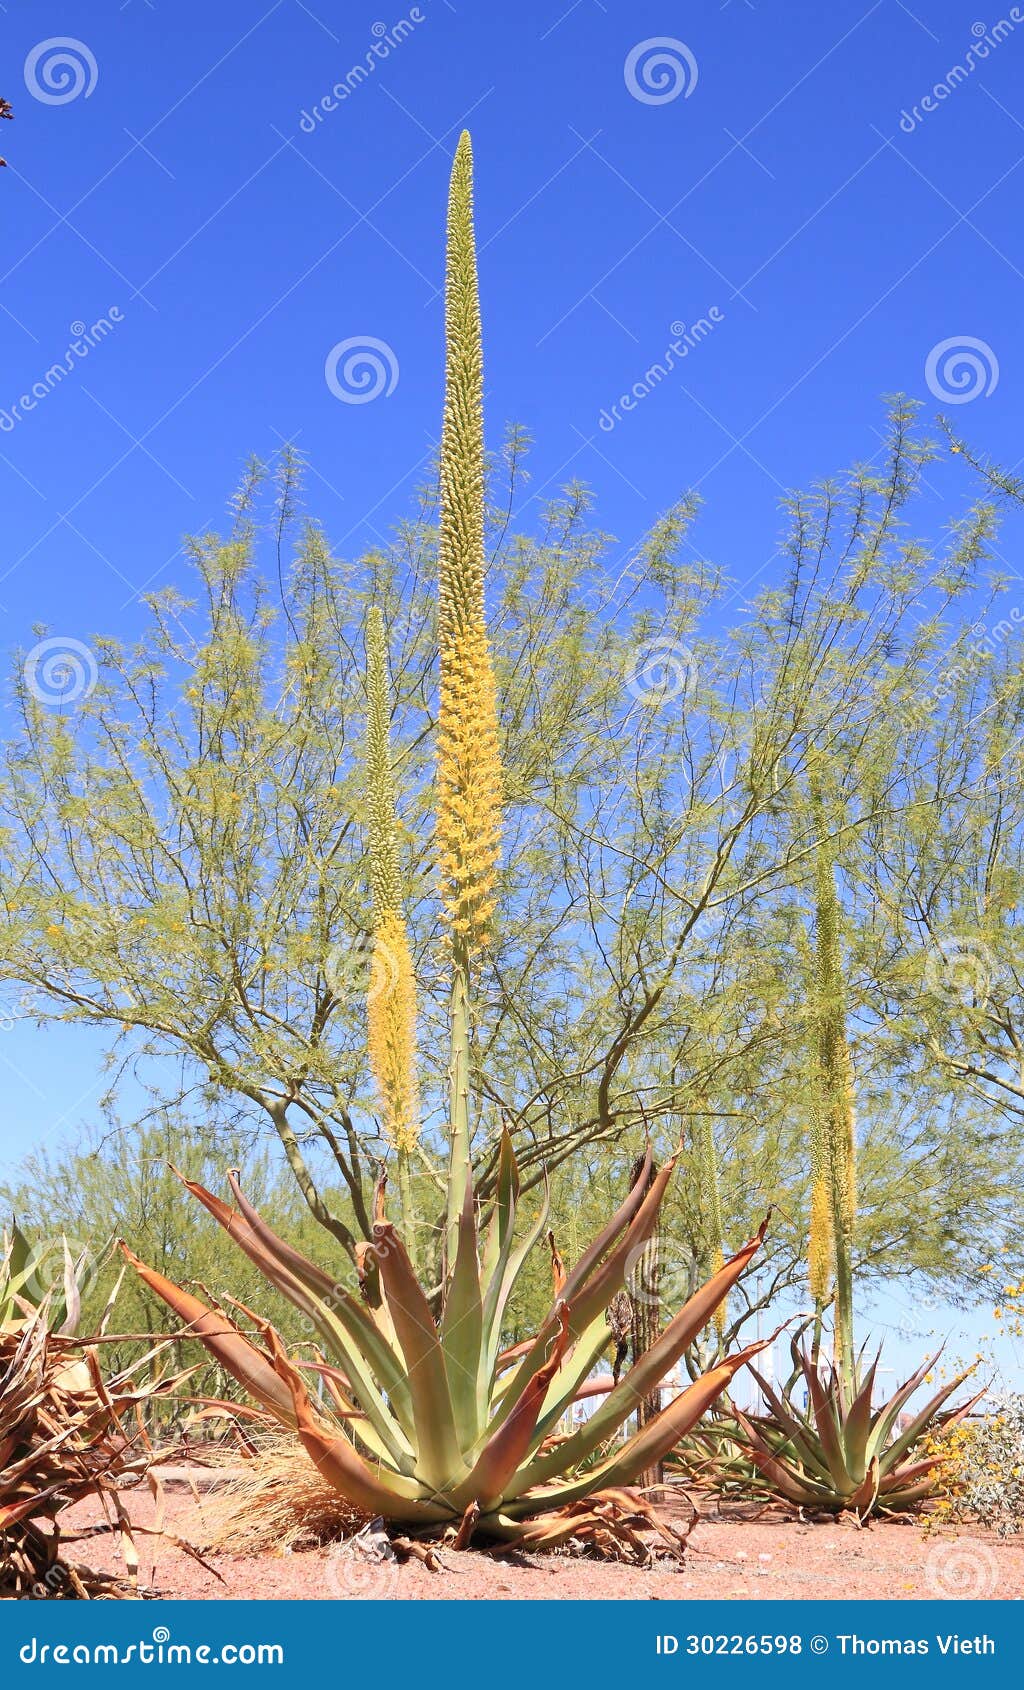 usa, arizona: blooming utah agave